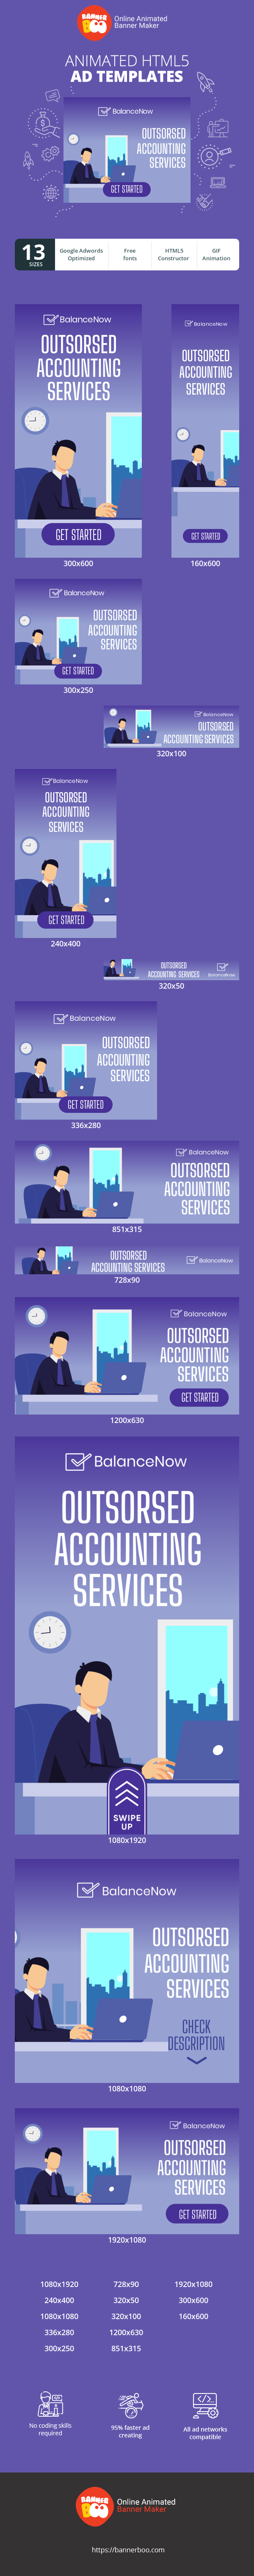 Шаблон рекламного банера — Outsorsed Accounting Services — Finance